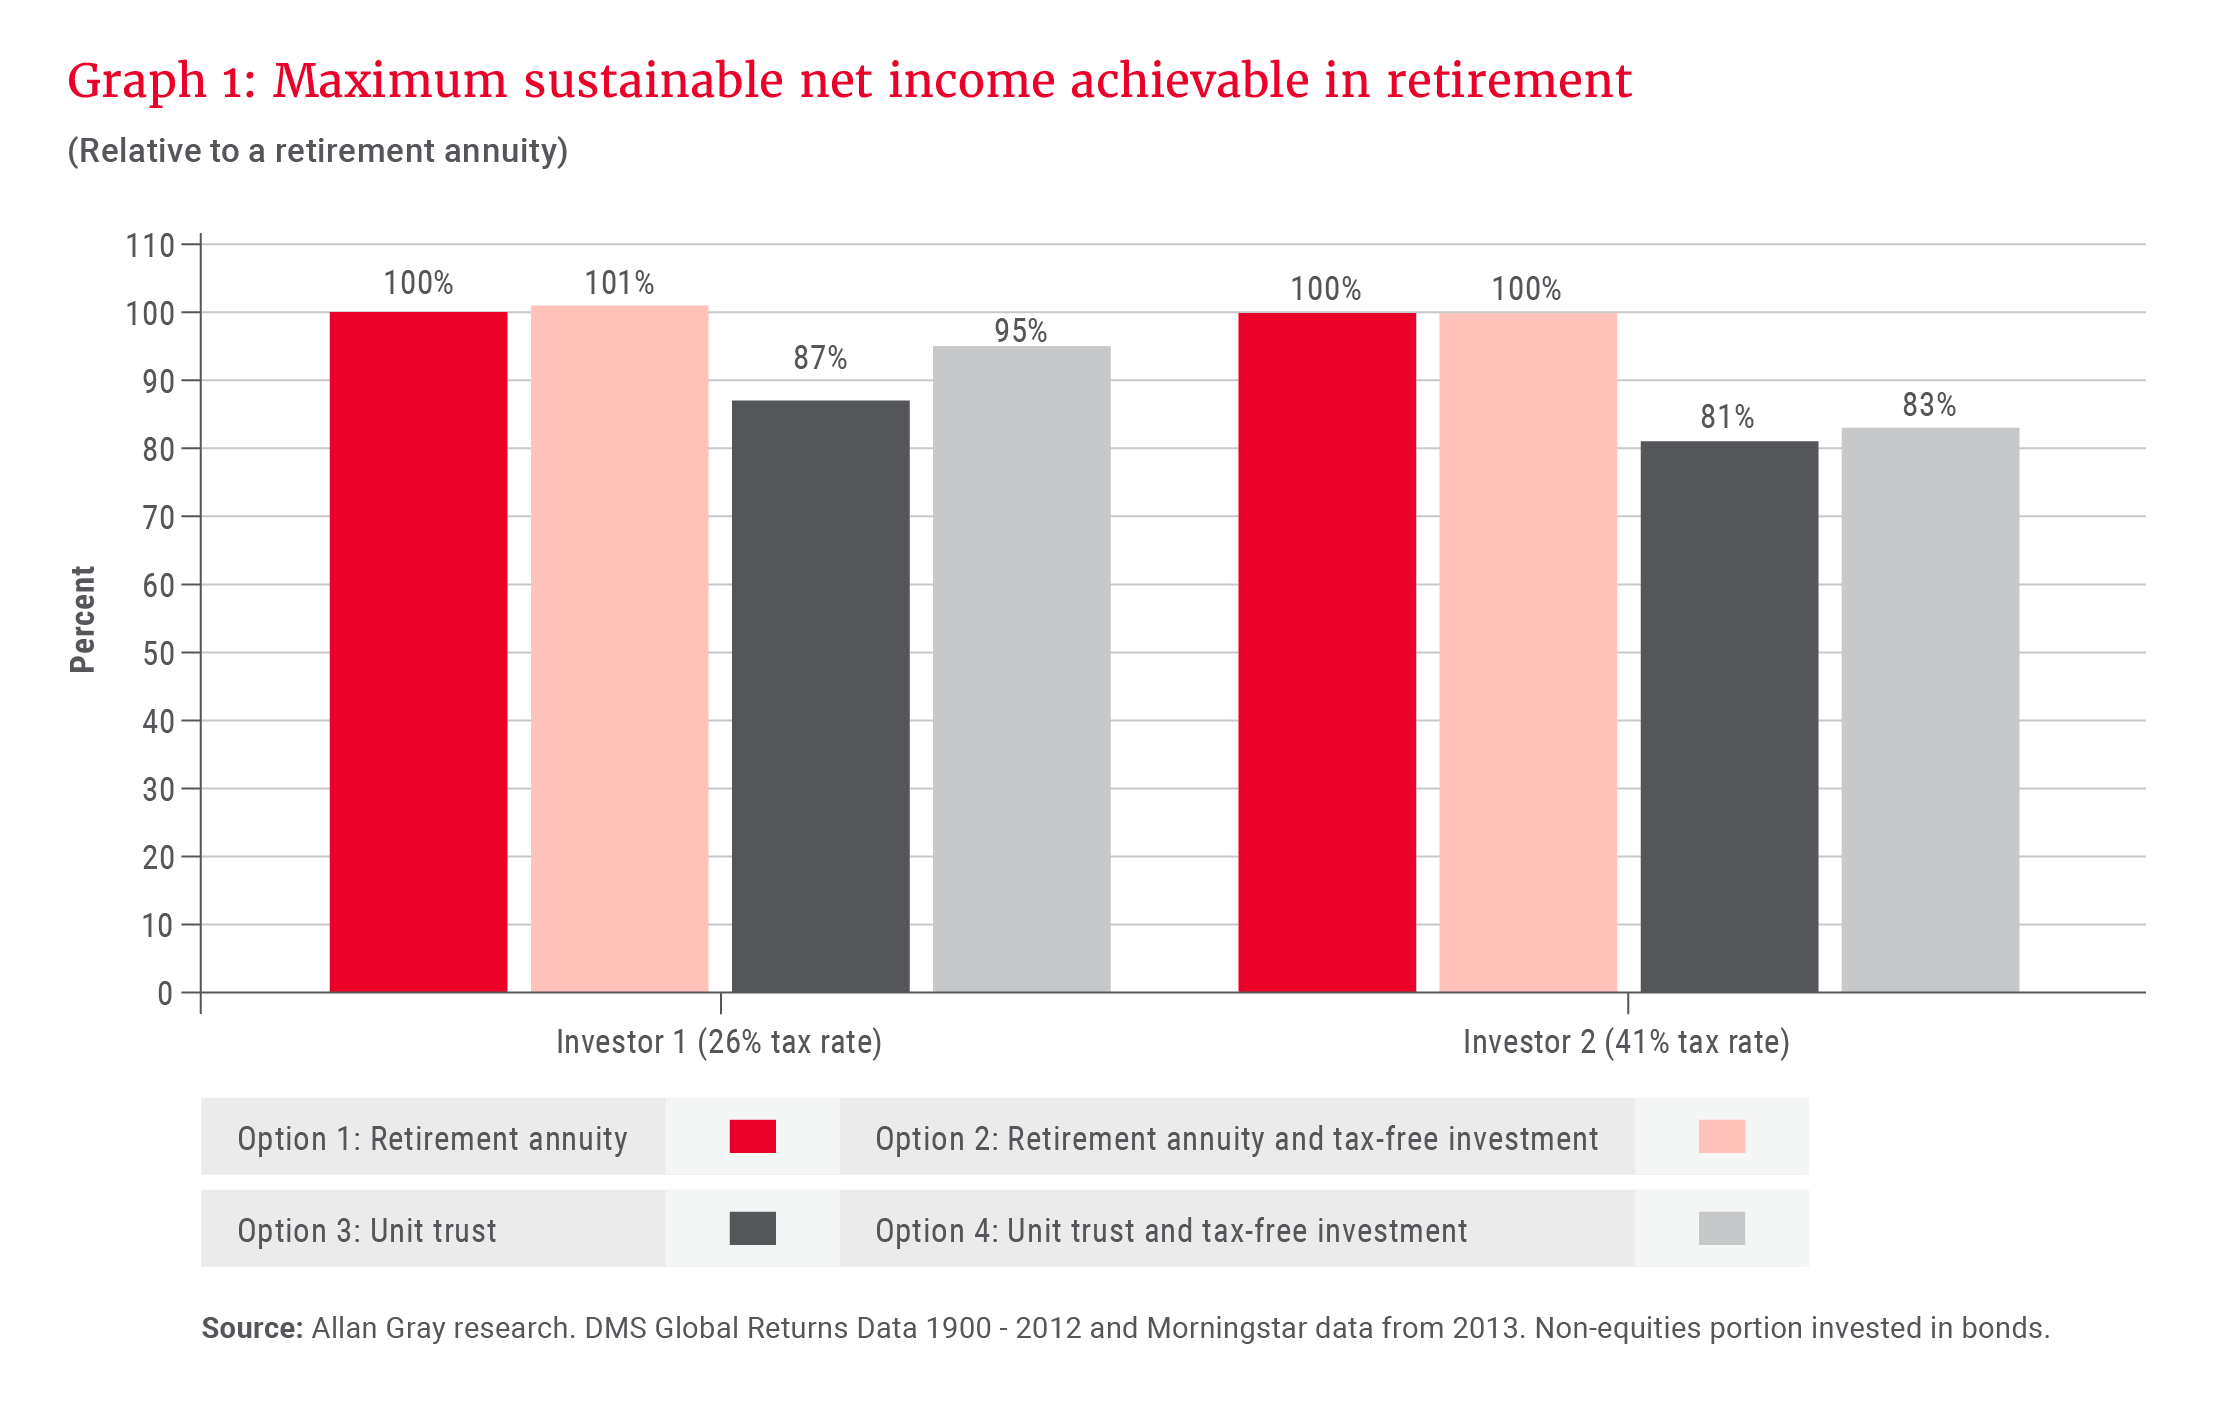 Maximum sustainable net income achievable in retirement